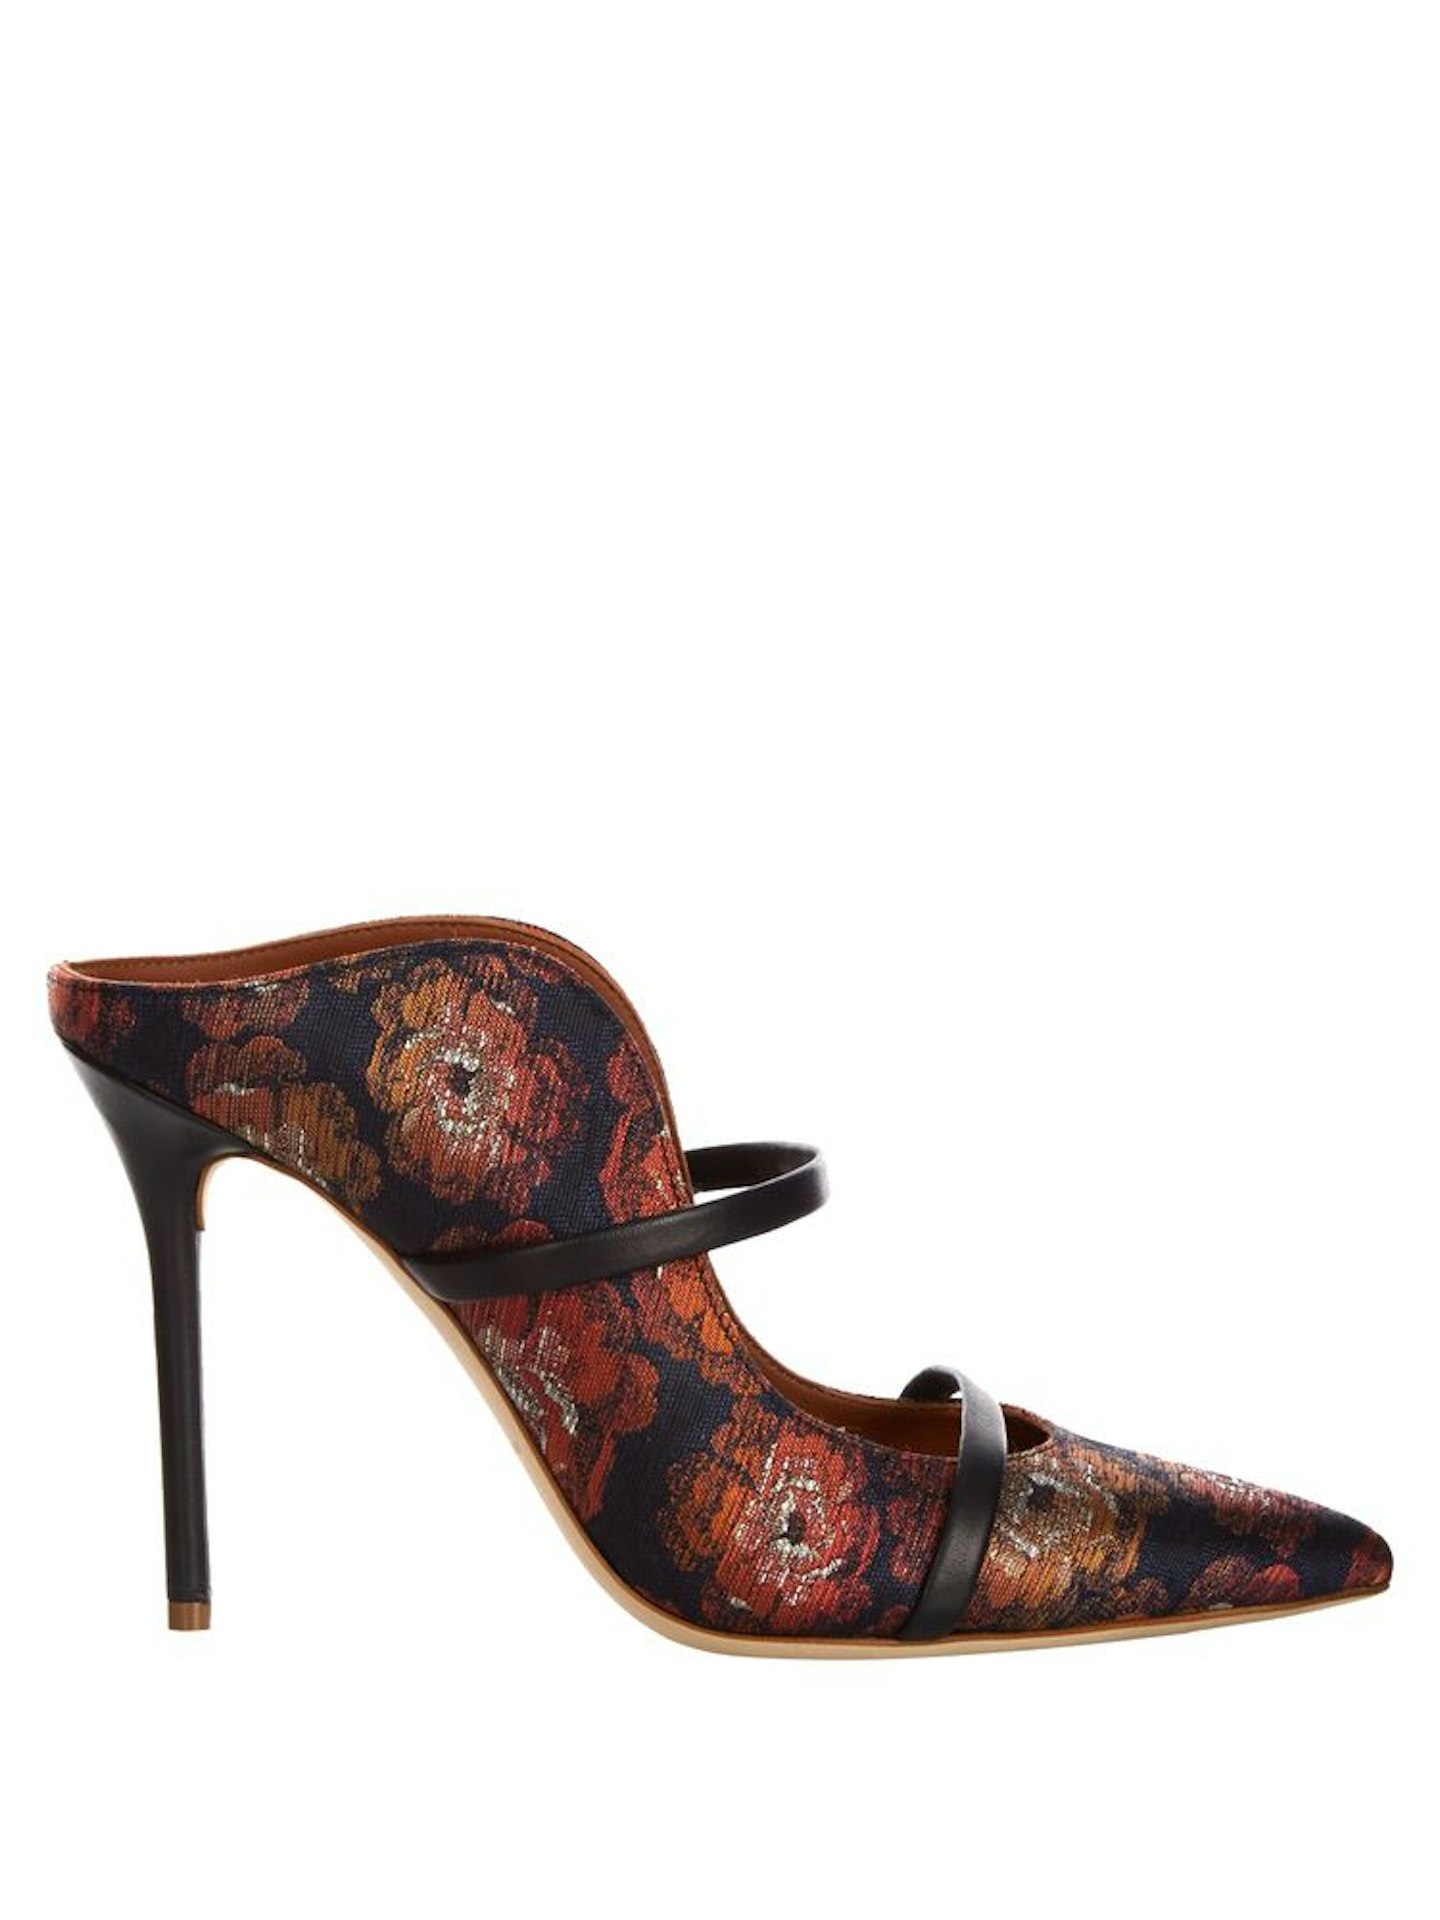 stiletto-heels